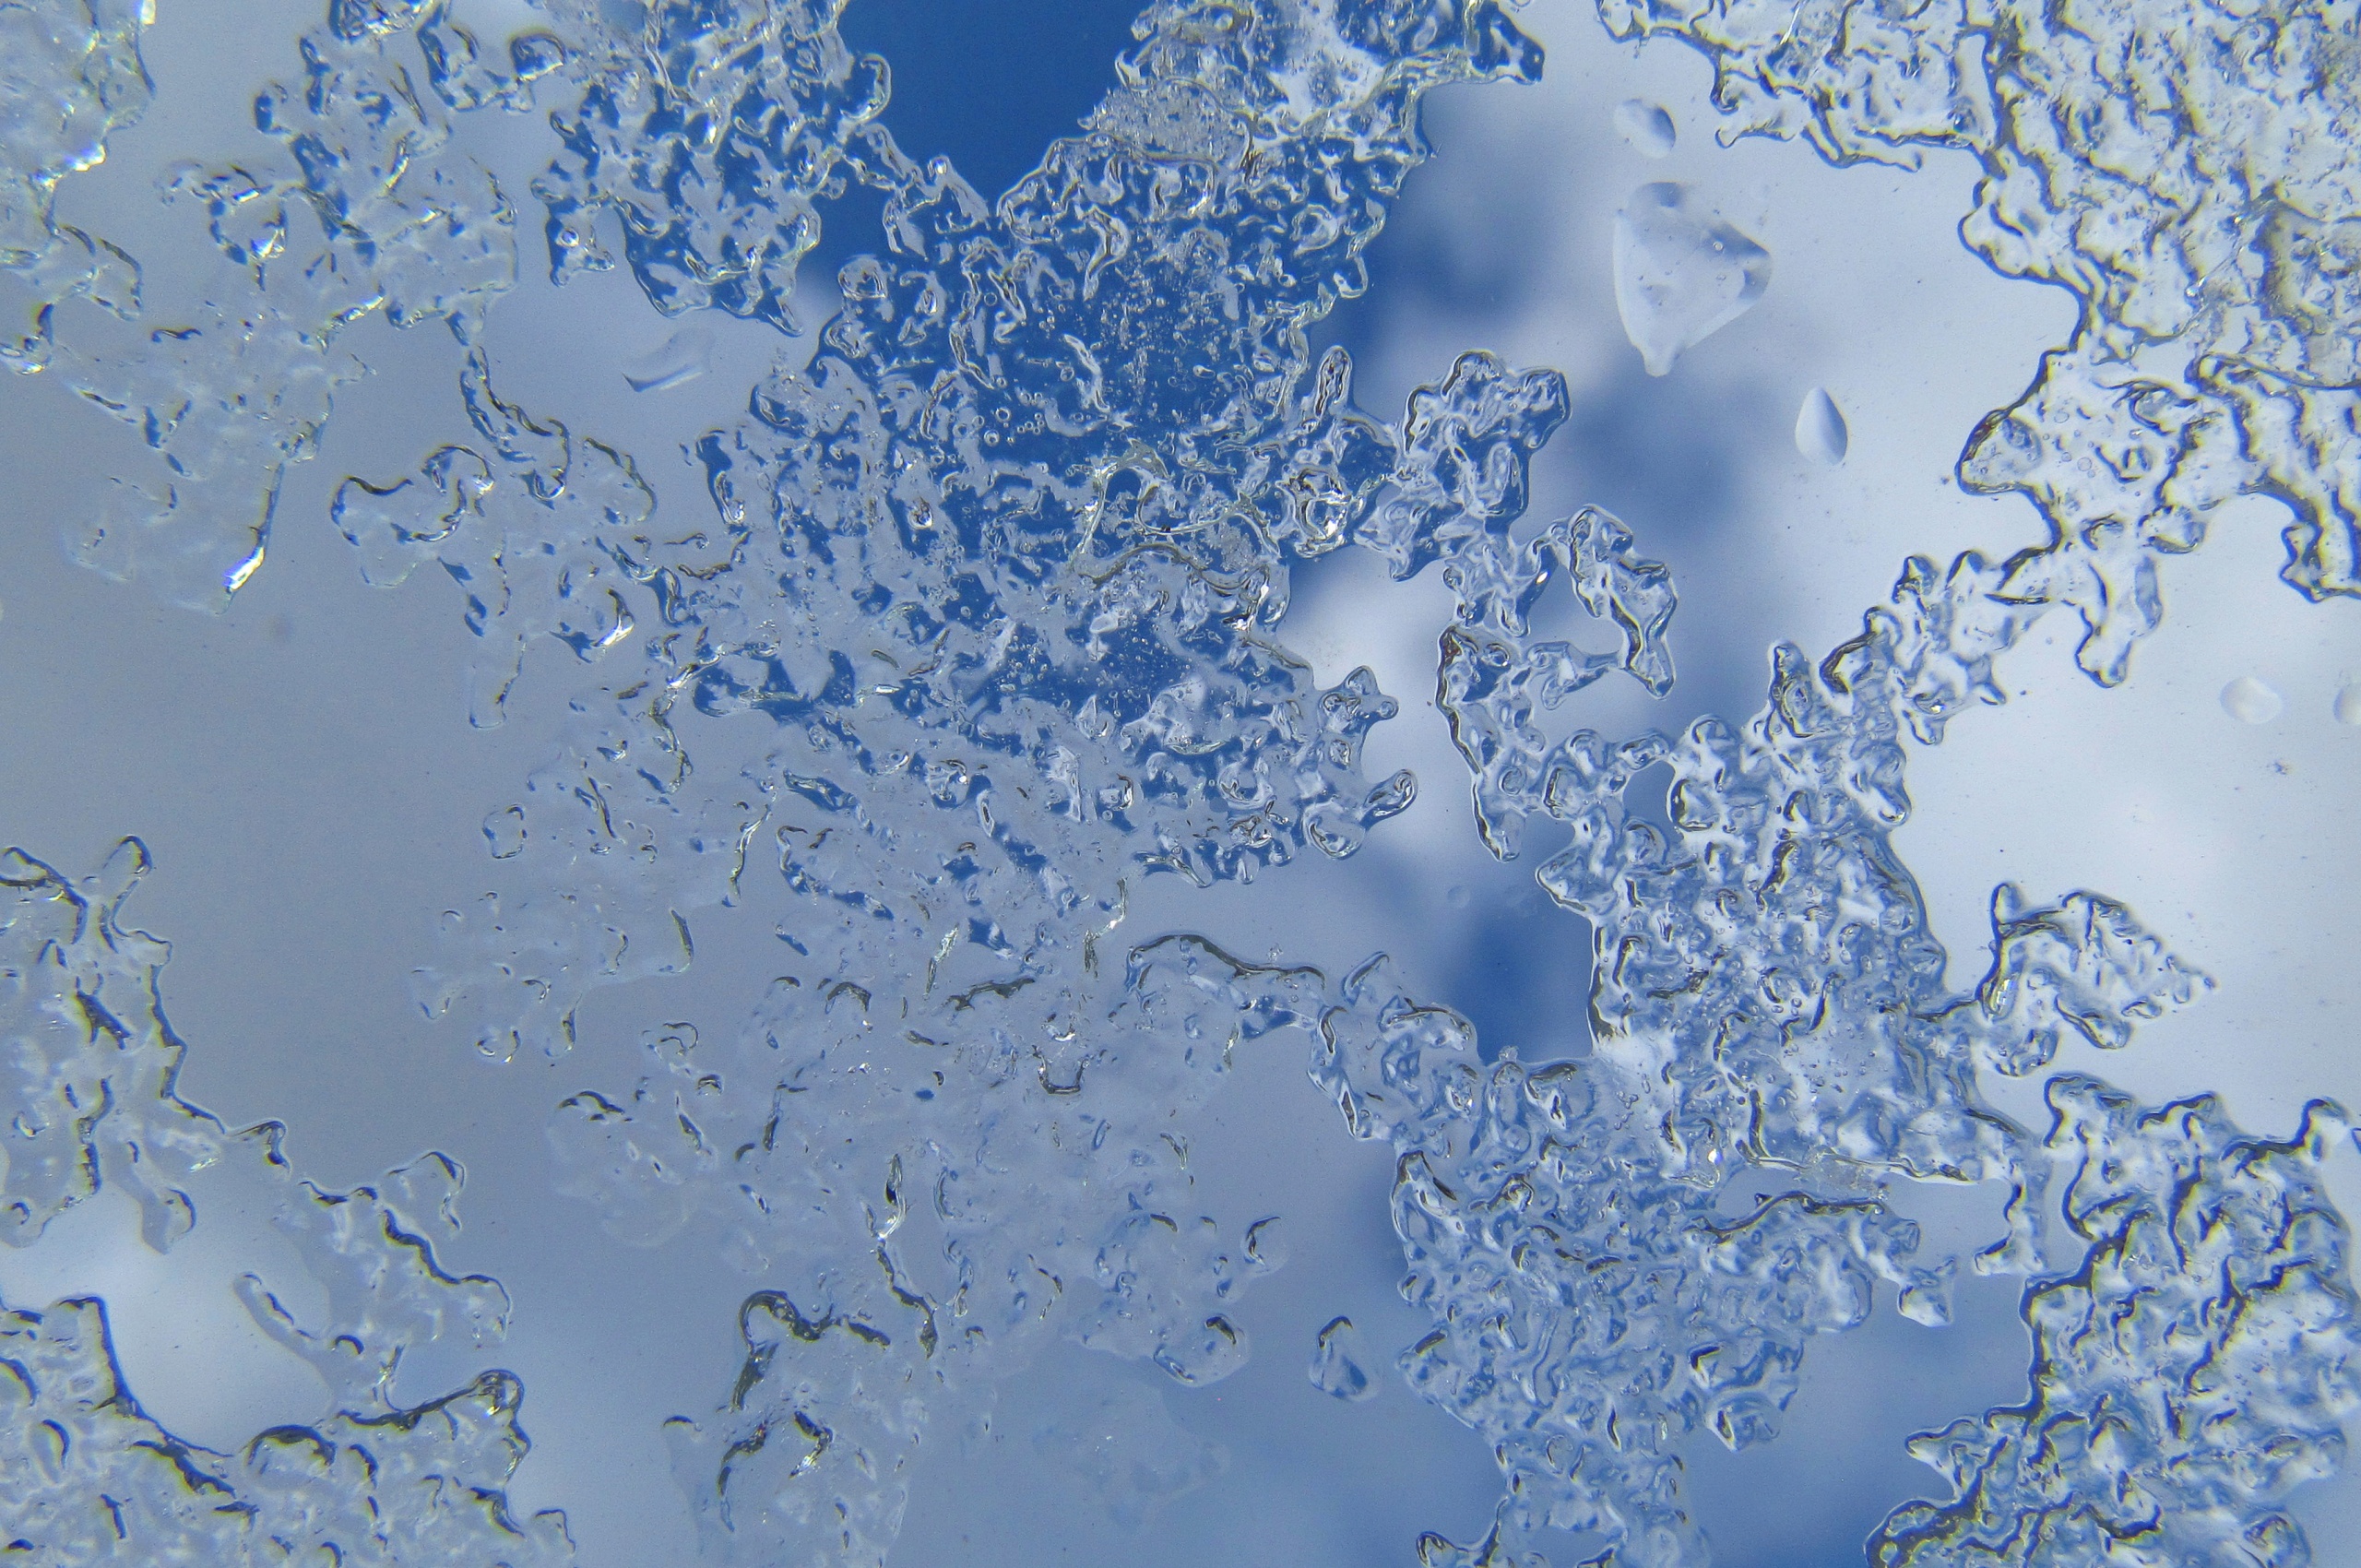 Ice On Window